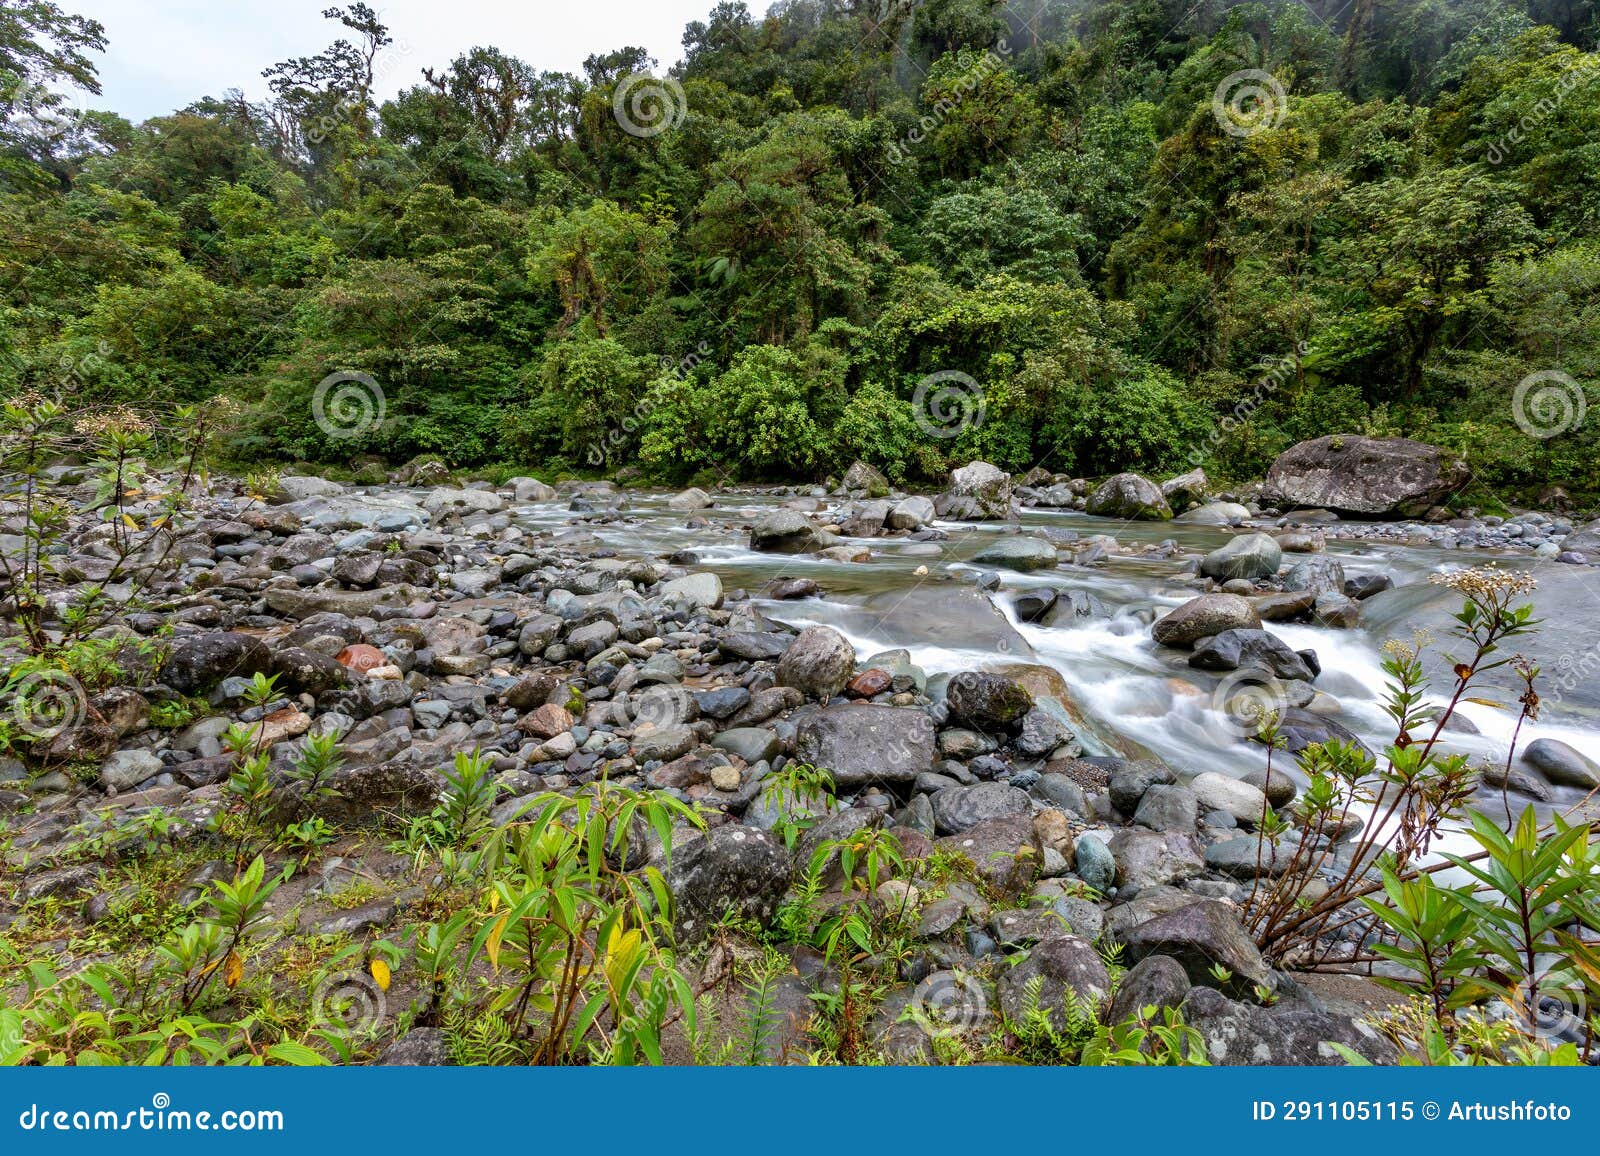 the orosi river, tapanti - cerro de la muerte massif national park